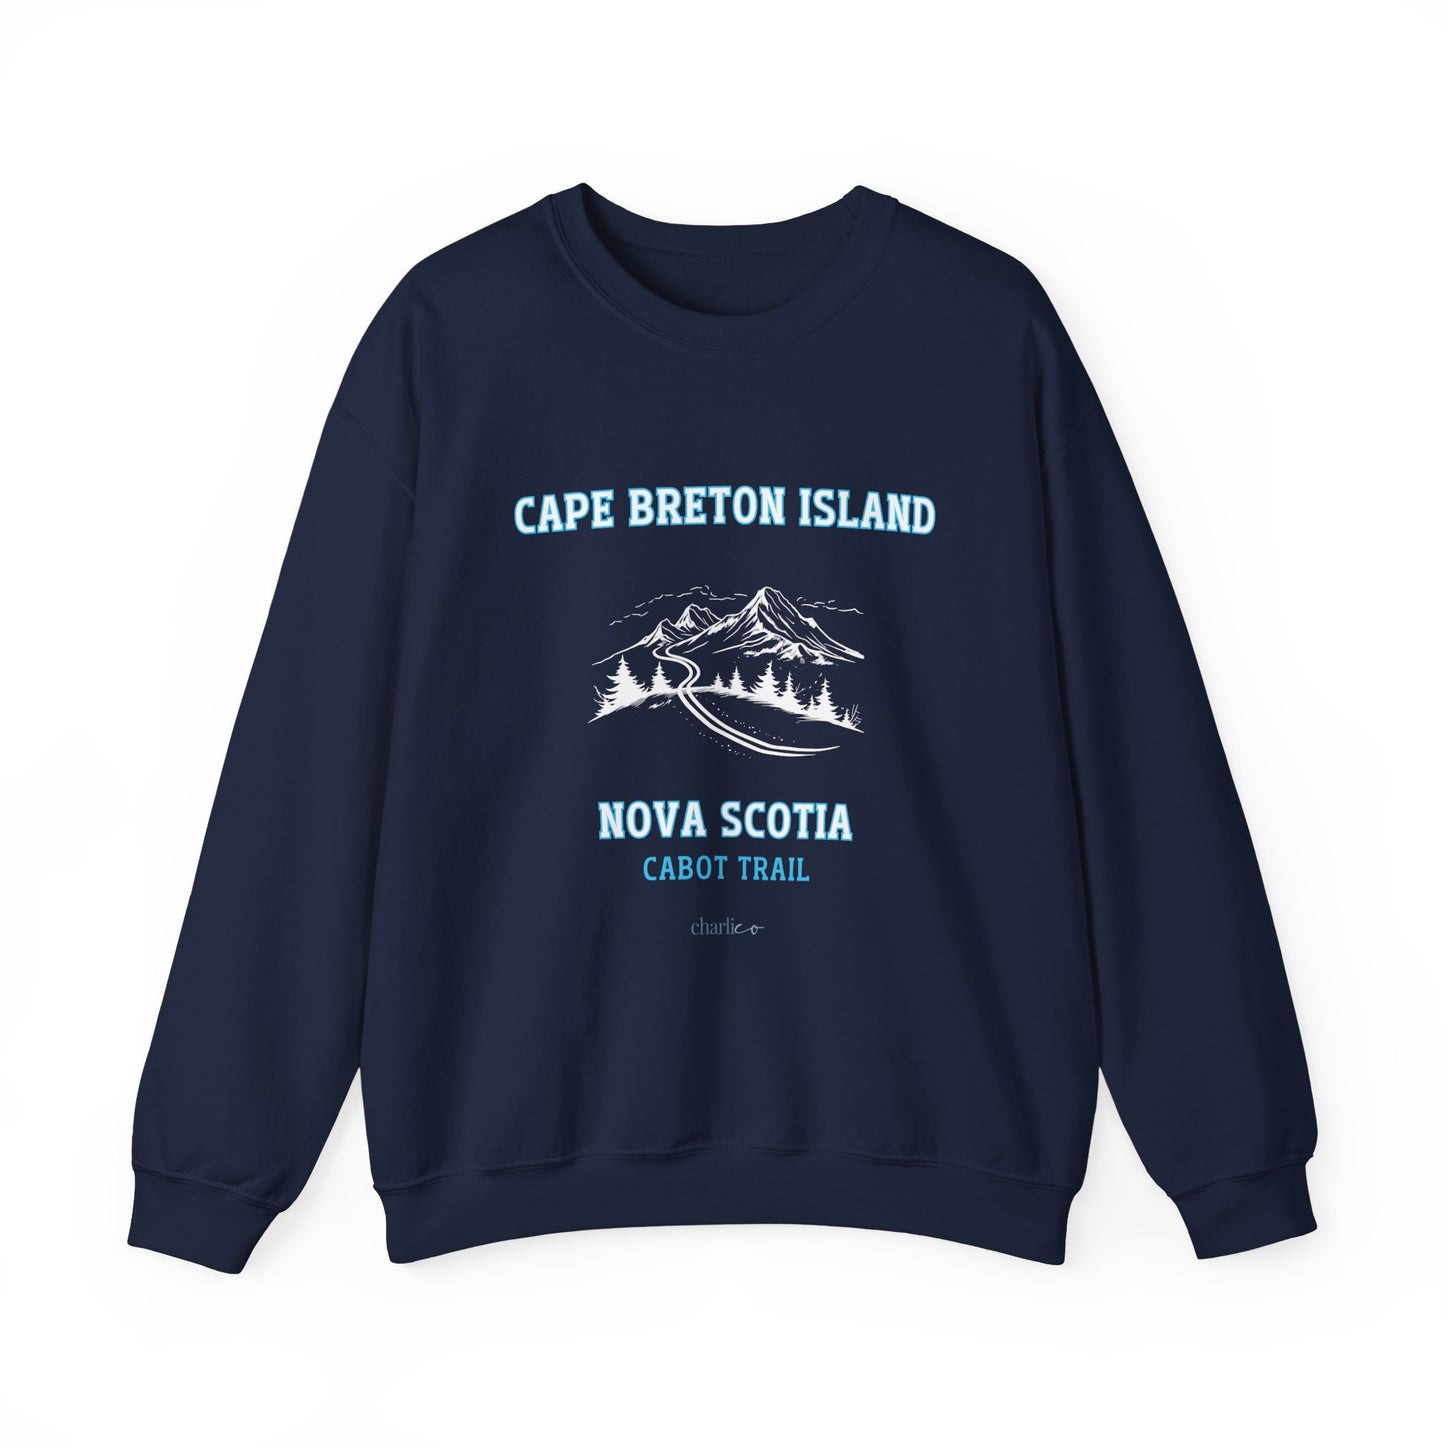 CAPE BRETON crew neck sweatshirt for adults